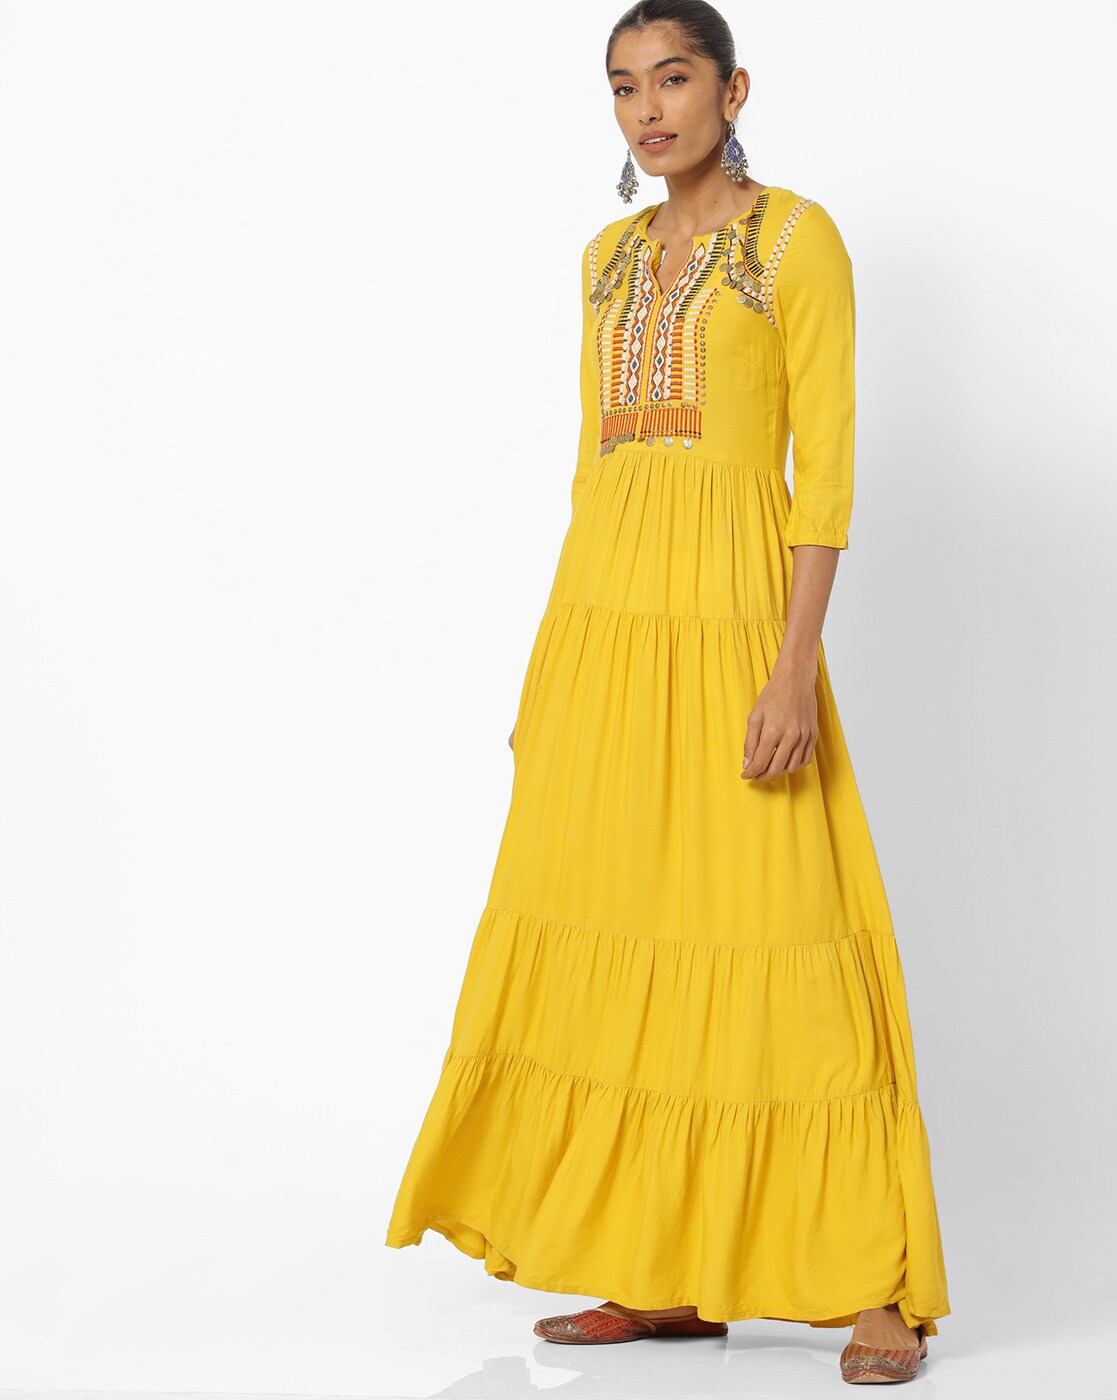 w yellow dress